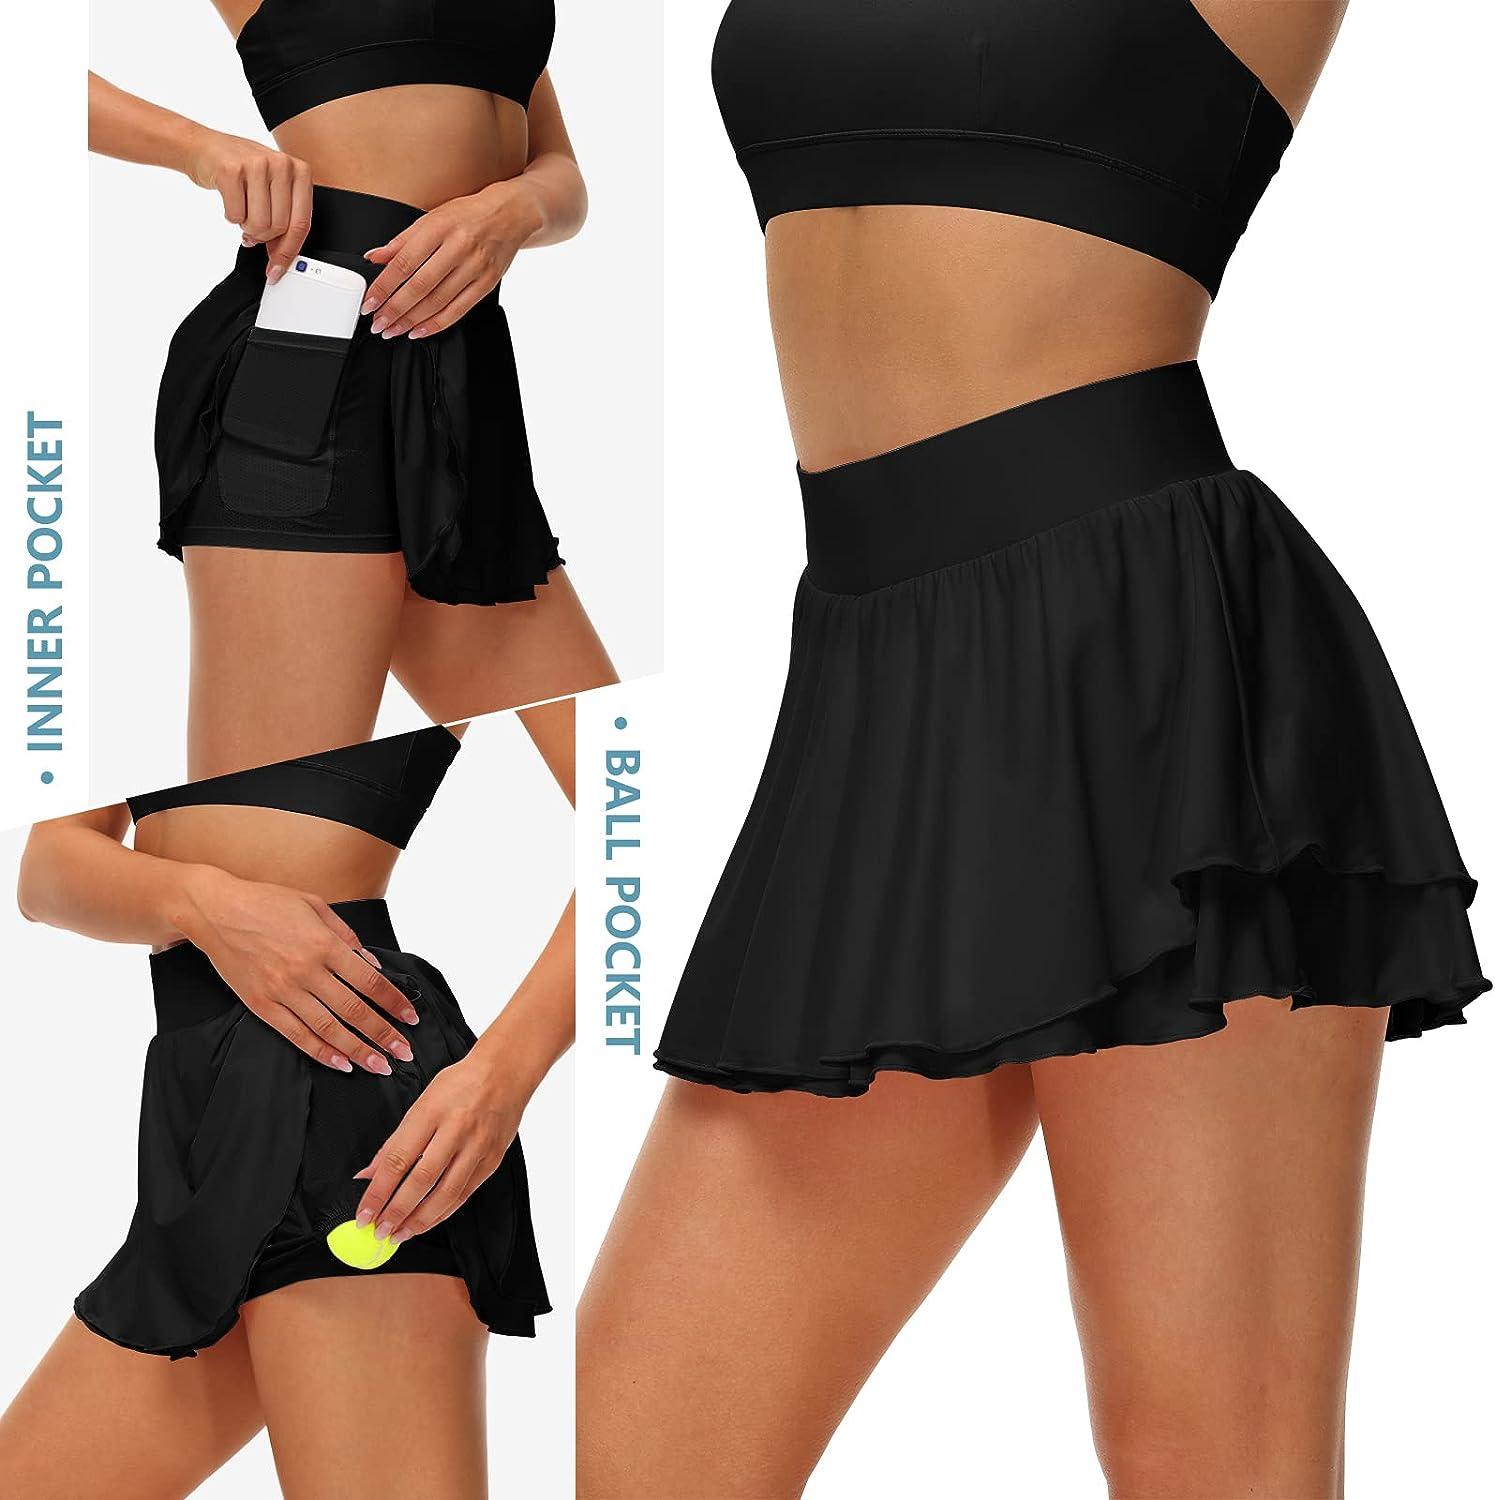 UrKeuf Women's Athletic Tennis Skirts with Pockets 13in Ruffle Golf Running  Workout Ice Silk Flowy Skorts with Sports Shorts Black Medium